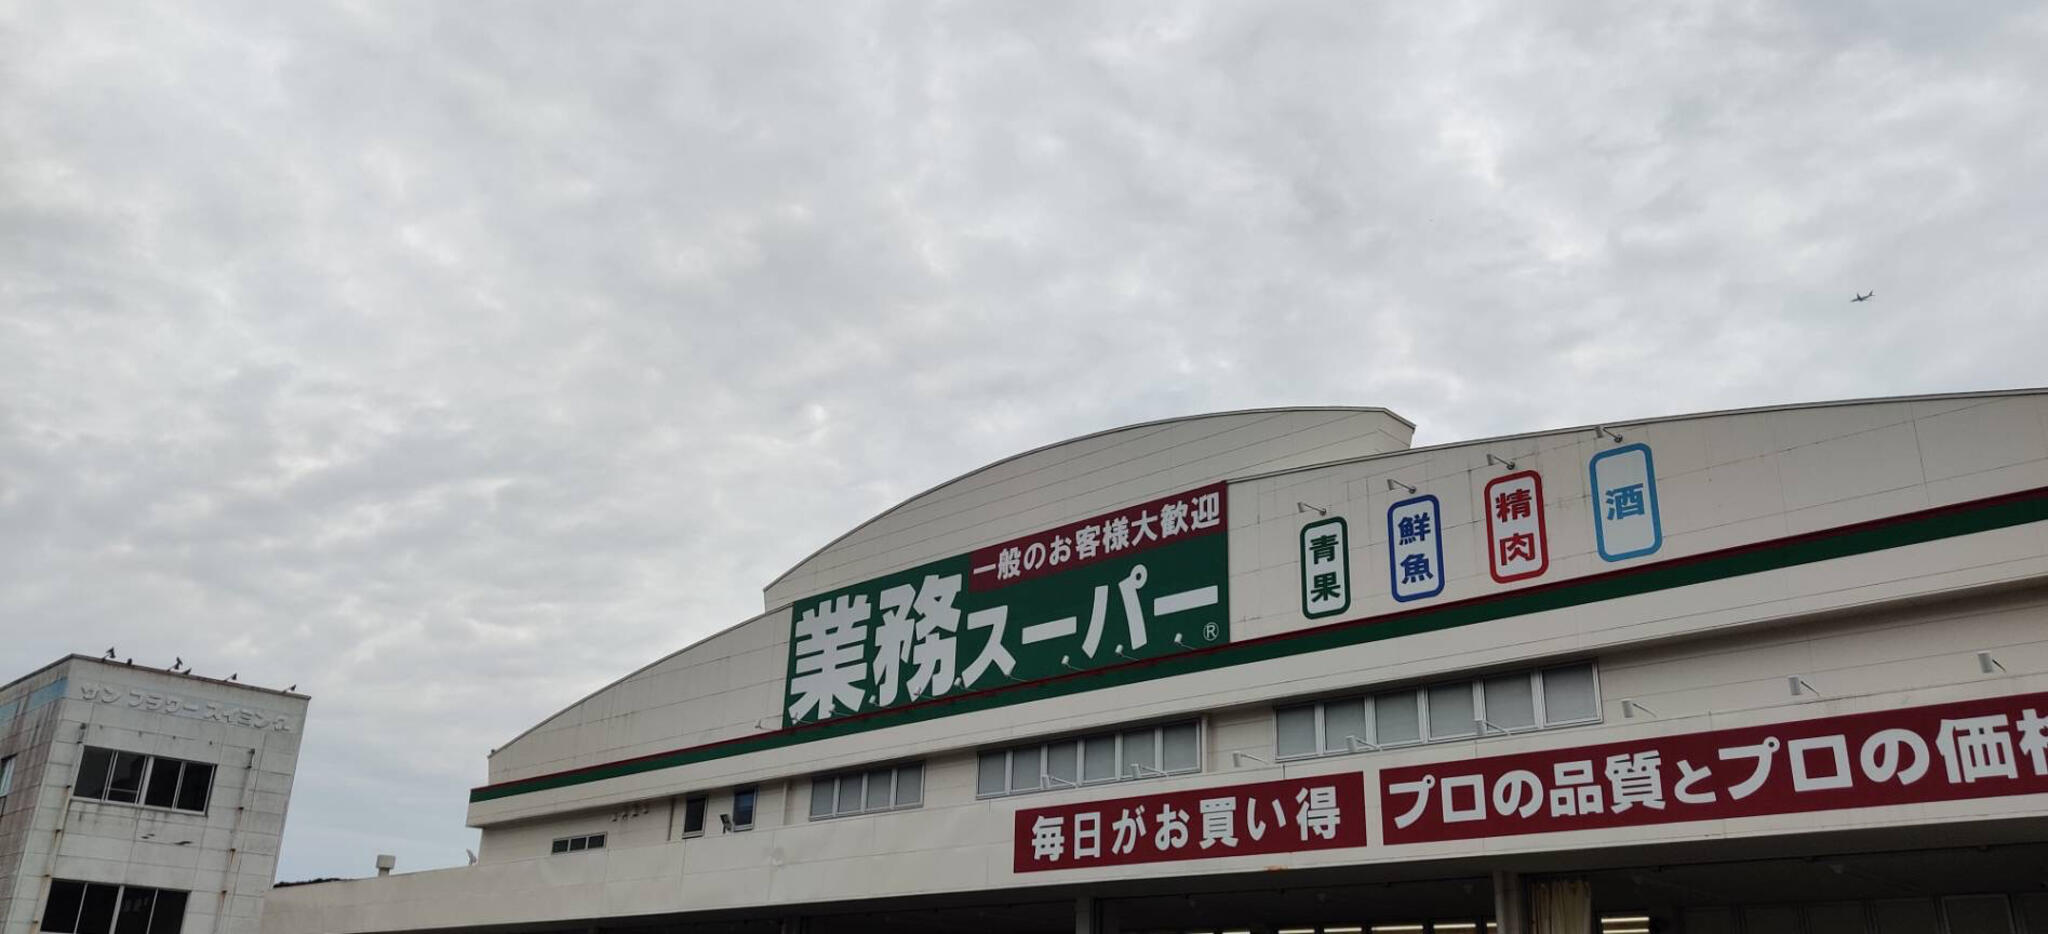 業務スーパー 宮崎大塚店の代表写真3